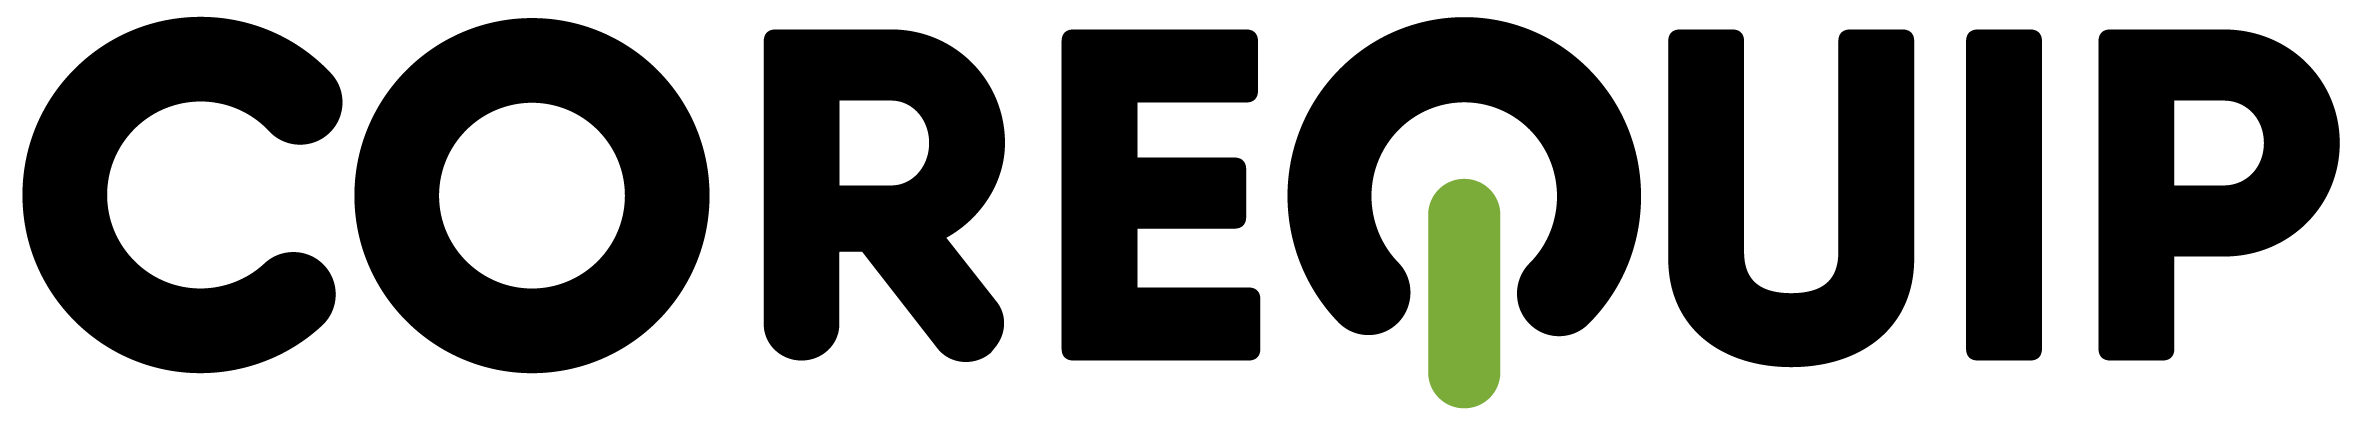 crystal line logo